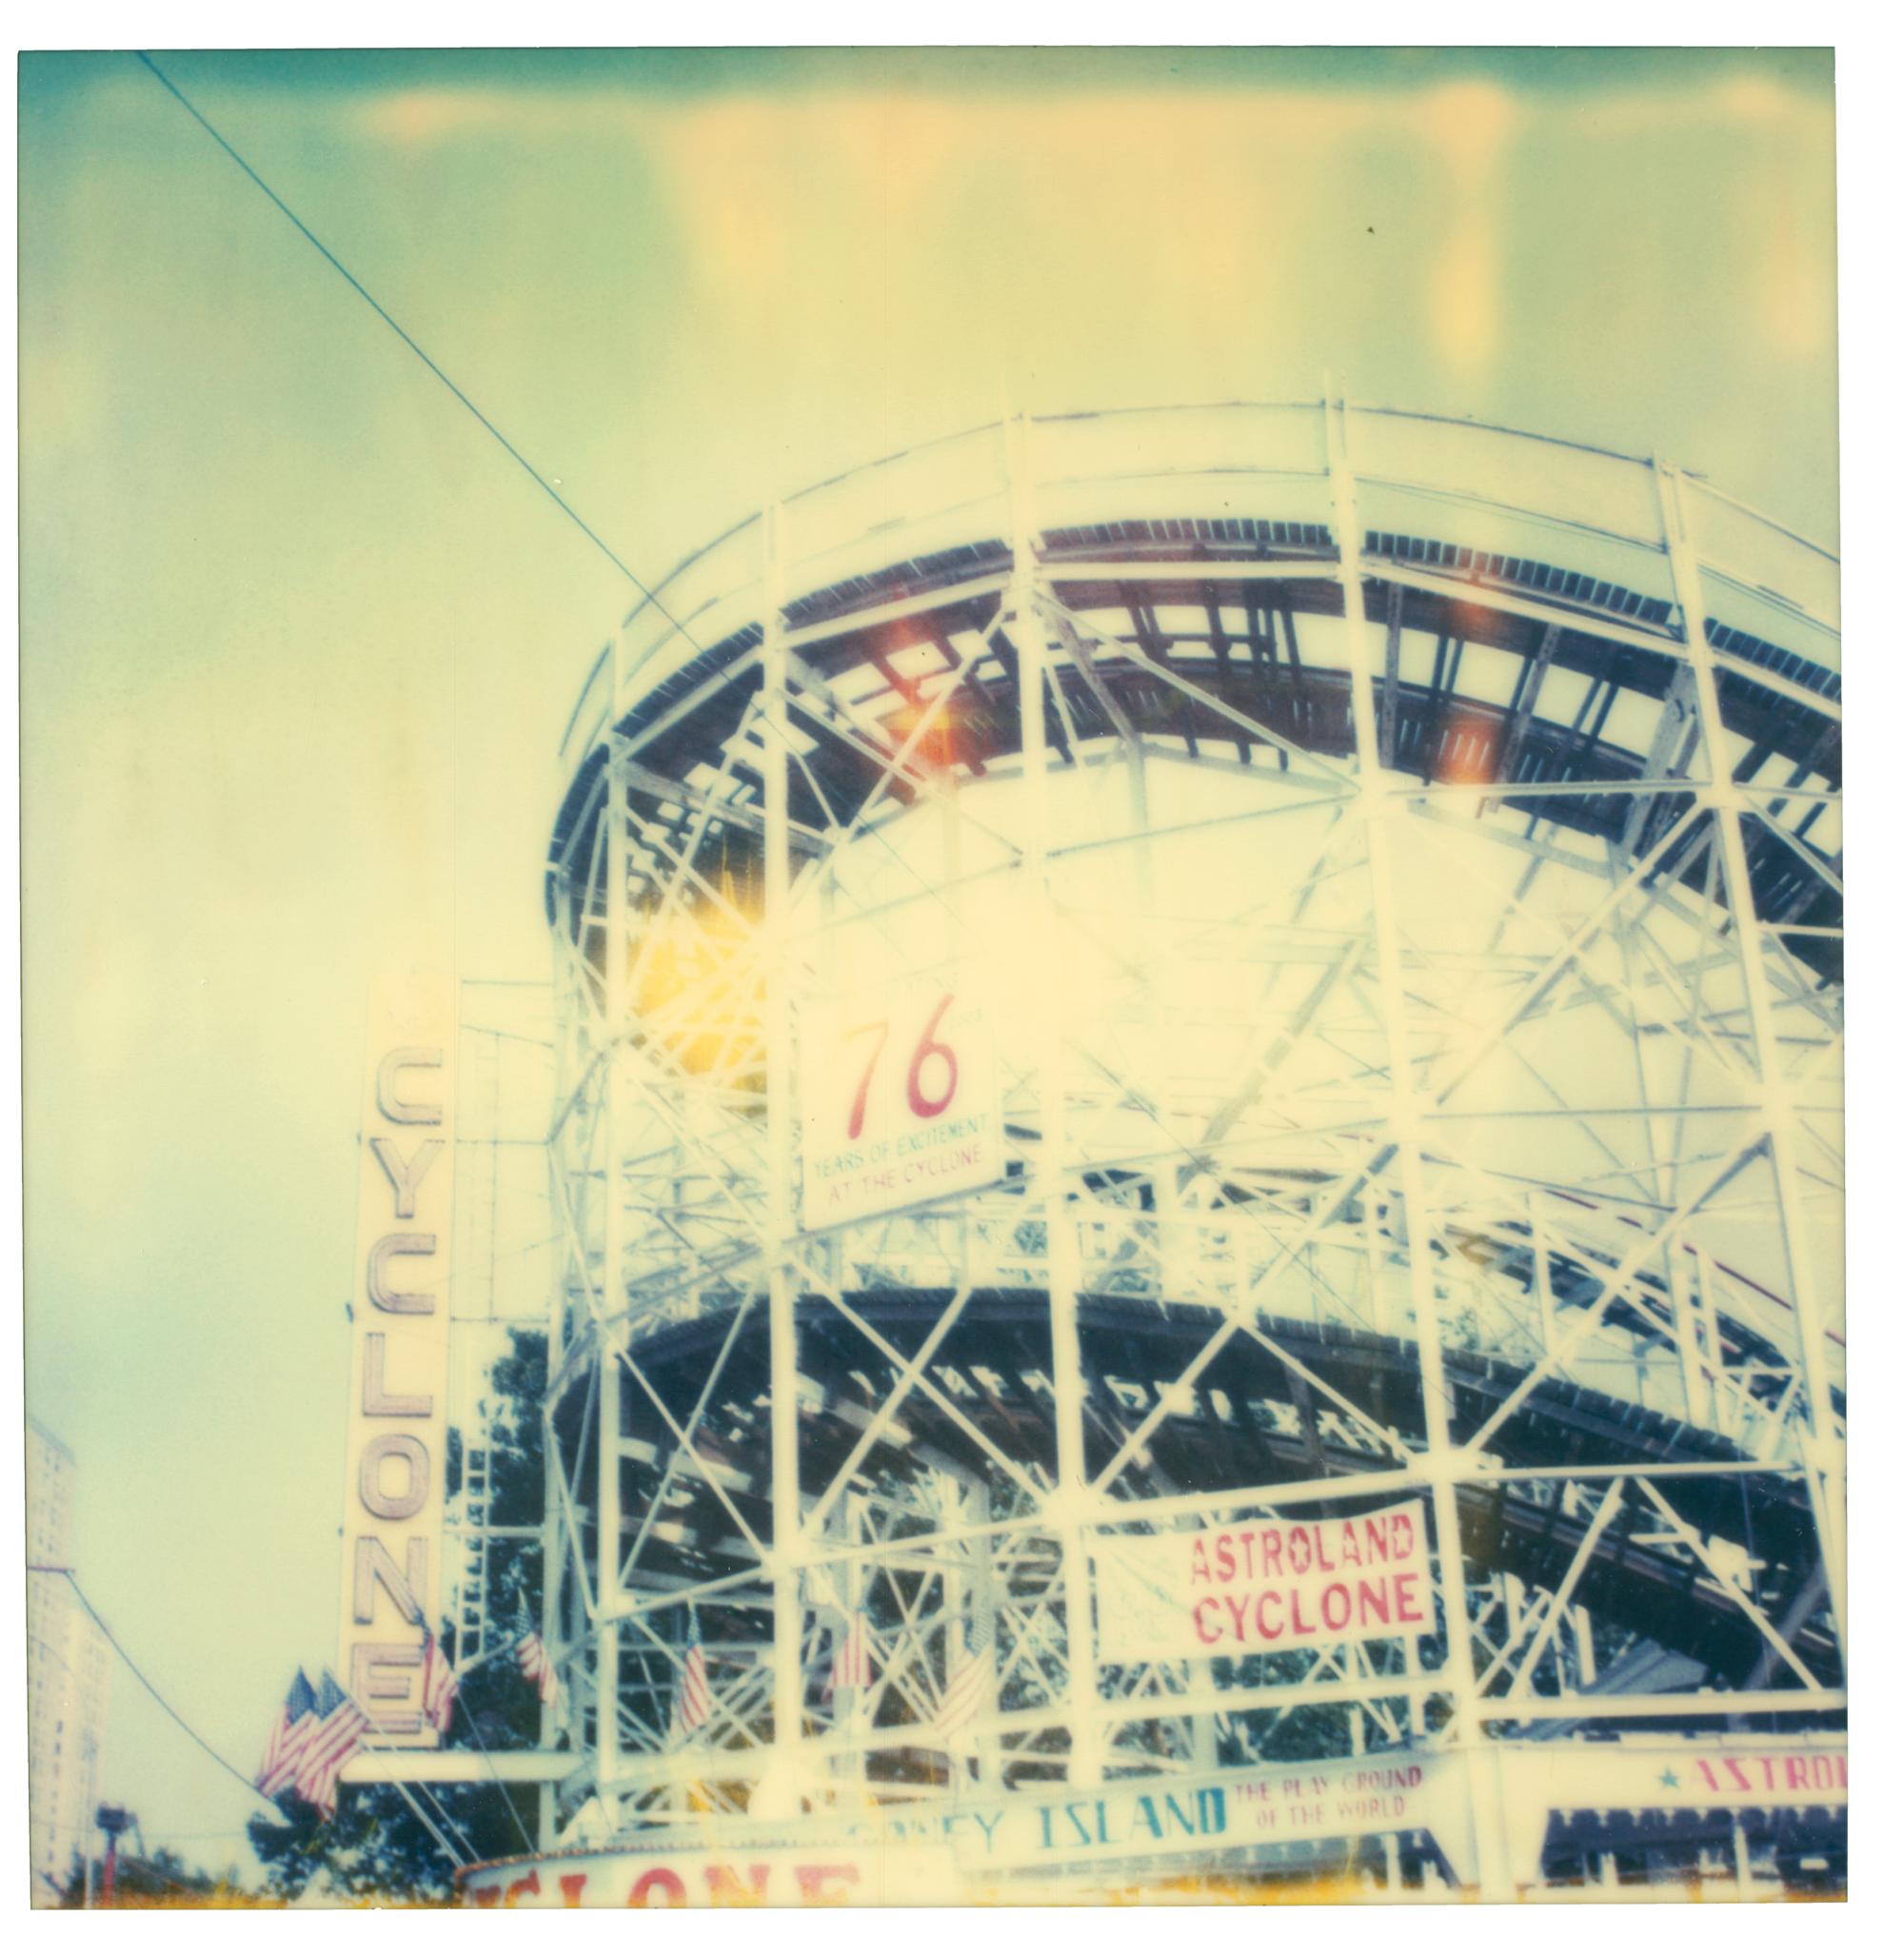 Stefanie Schneider Landscape Photograph - Cyclone (Stay) - Coney Island, 21 Century, Contemporary, Icons, Landscape